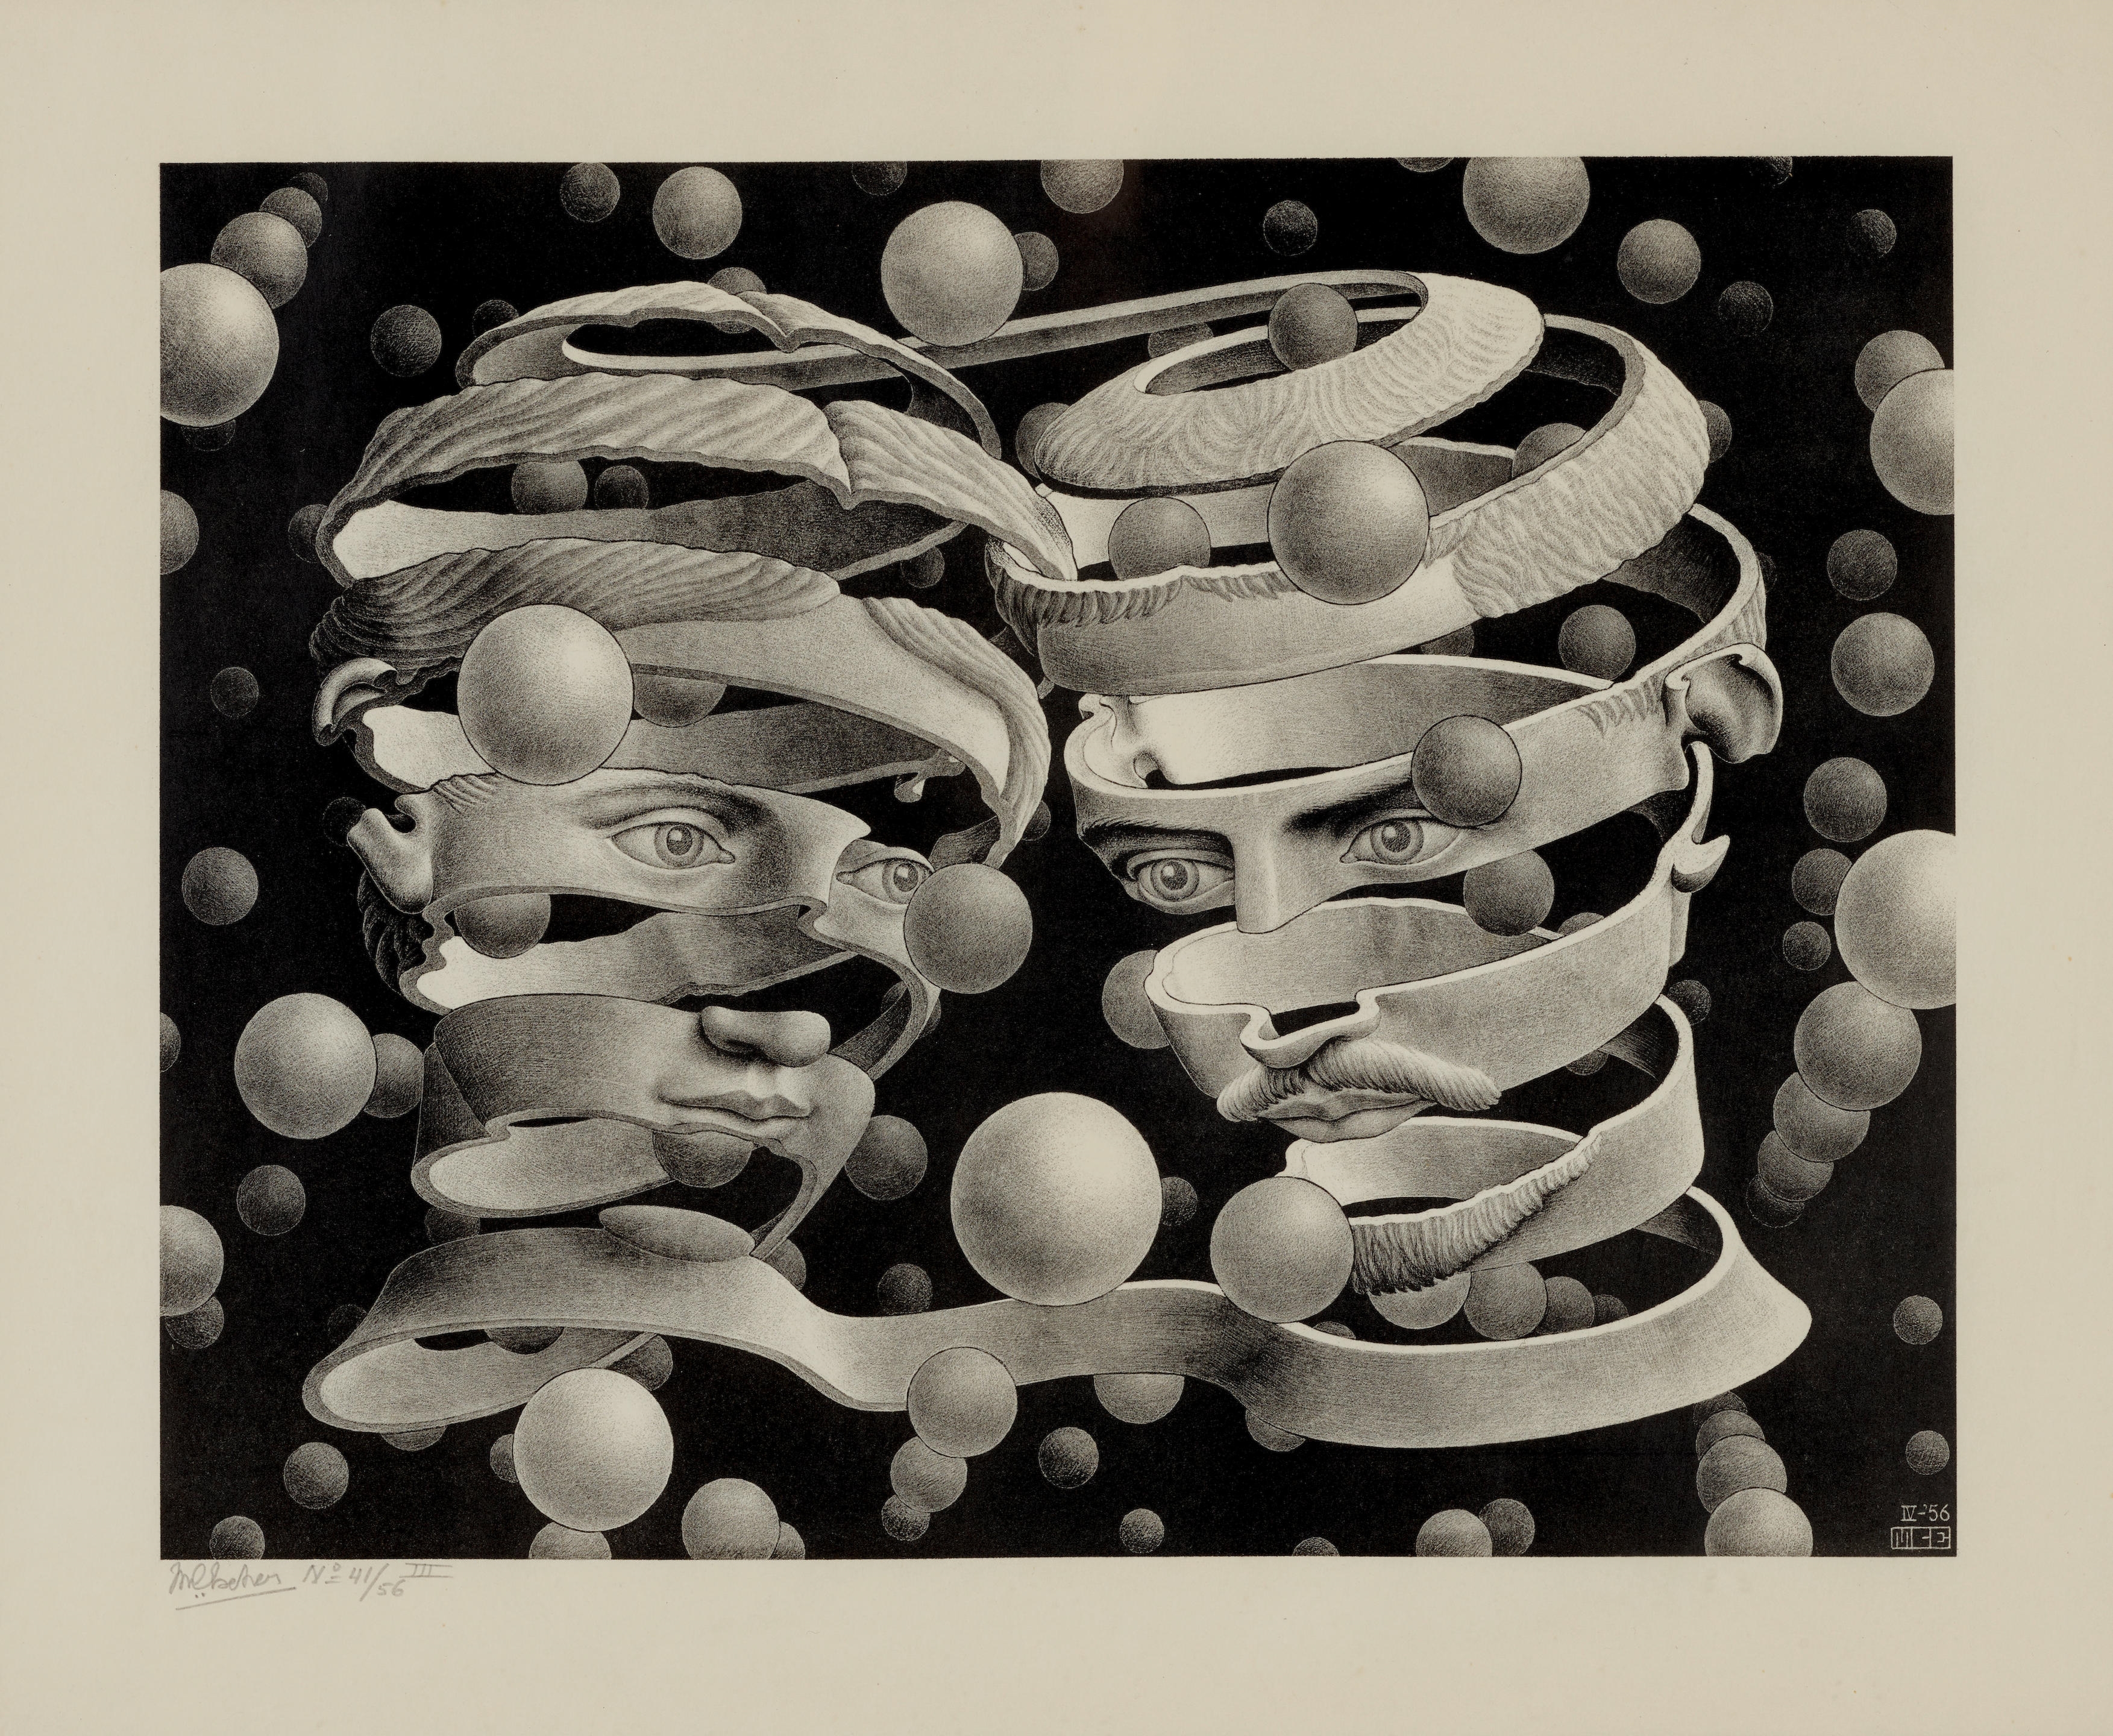 Bond of Union by Maurits Cornelis Escher, 1956